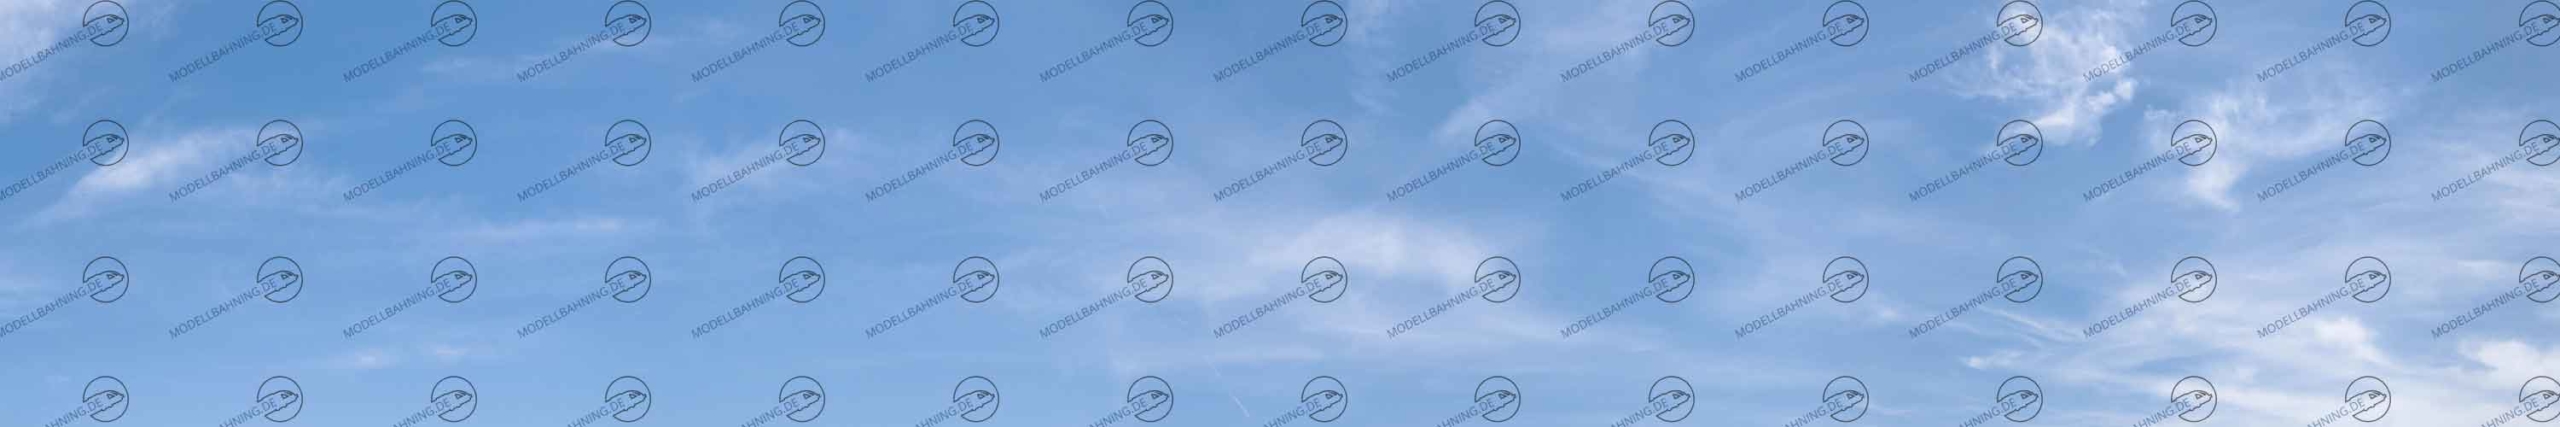 Endloser Himmel Teil 3 – Modellbahn Hintergrund 300cm x 50 cm 5